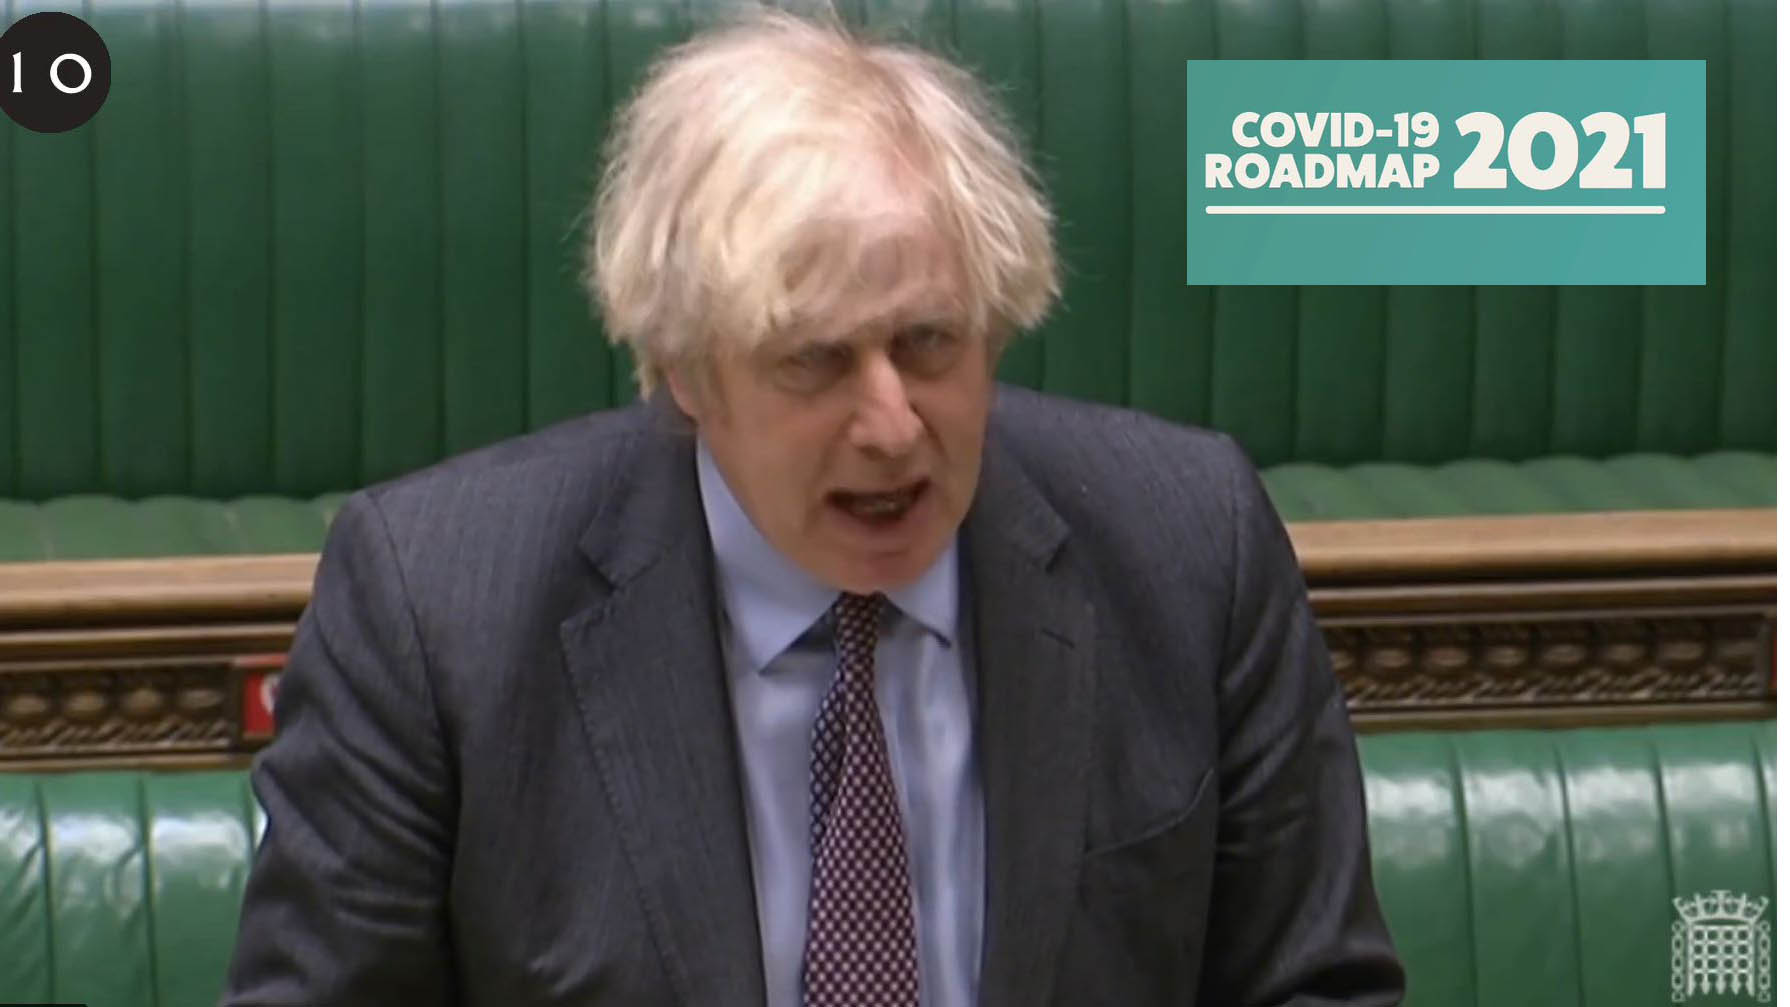 Covid-19: Boris Johnson sets ‘cautious’ 4 step plan to lift England’s lockdown